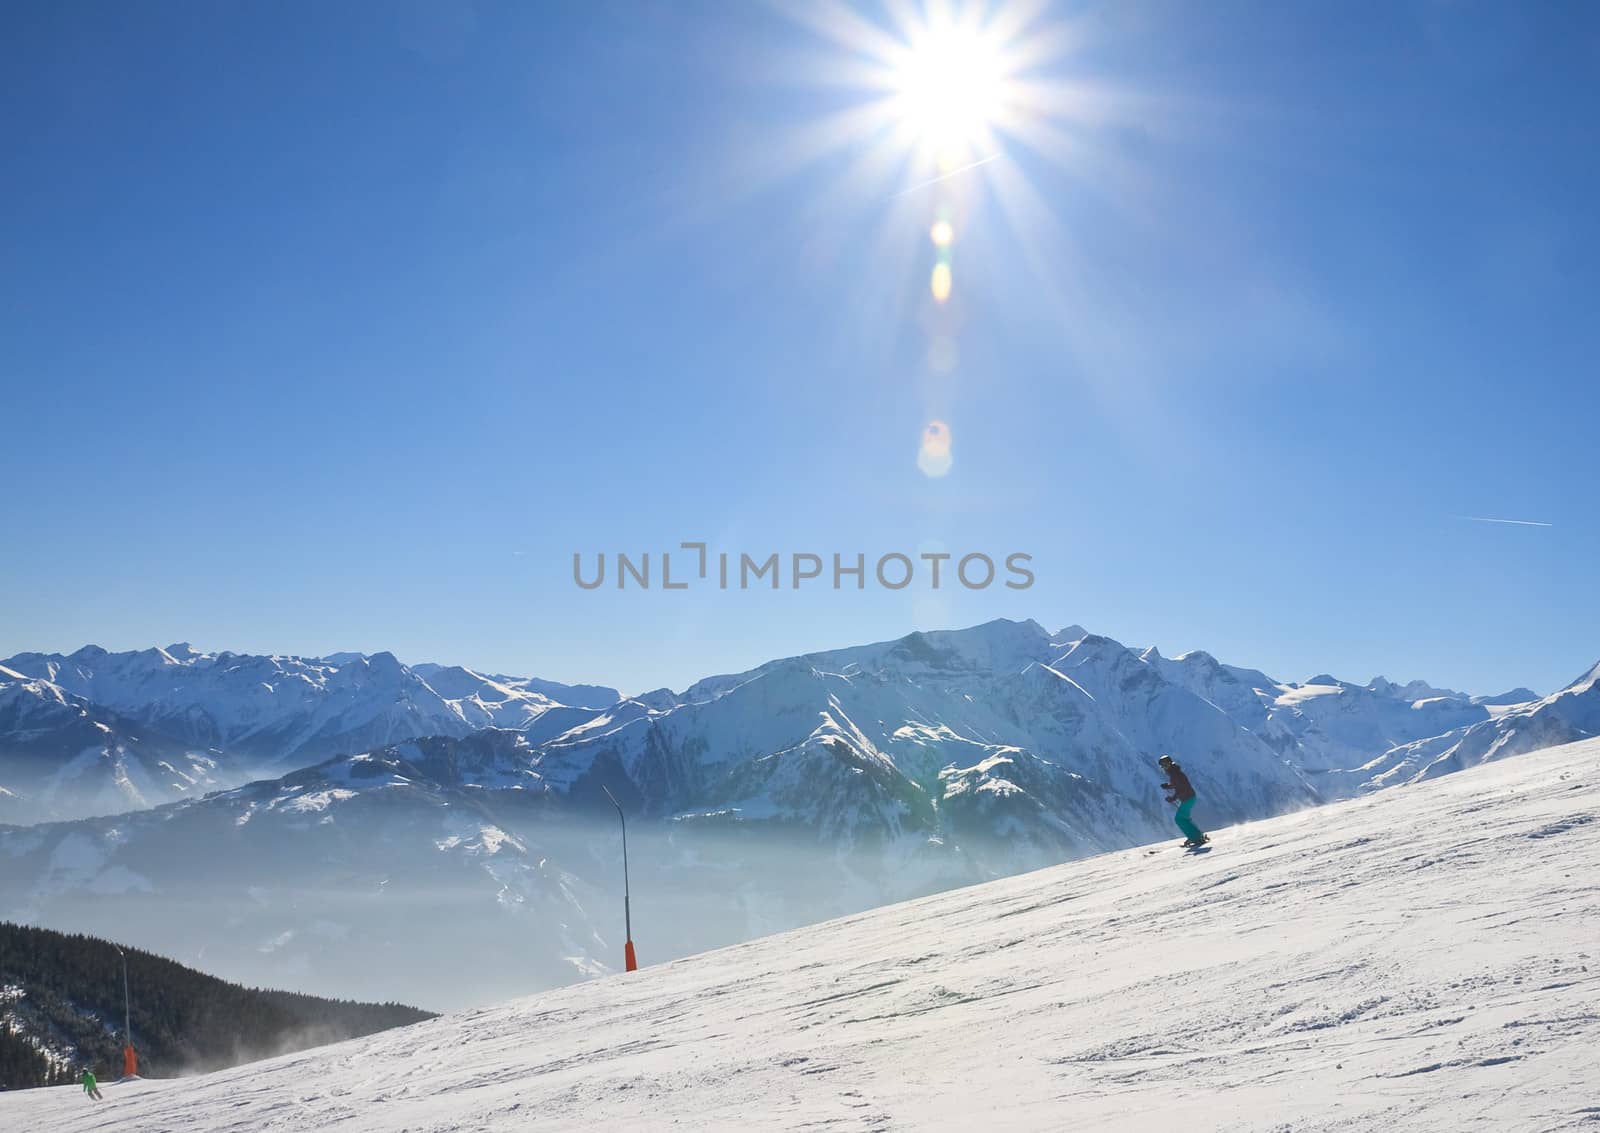 Ski resort Zell am See, Austrian Alps at winter by nikolpetr